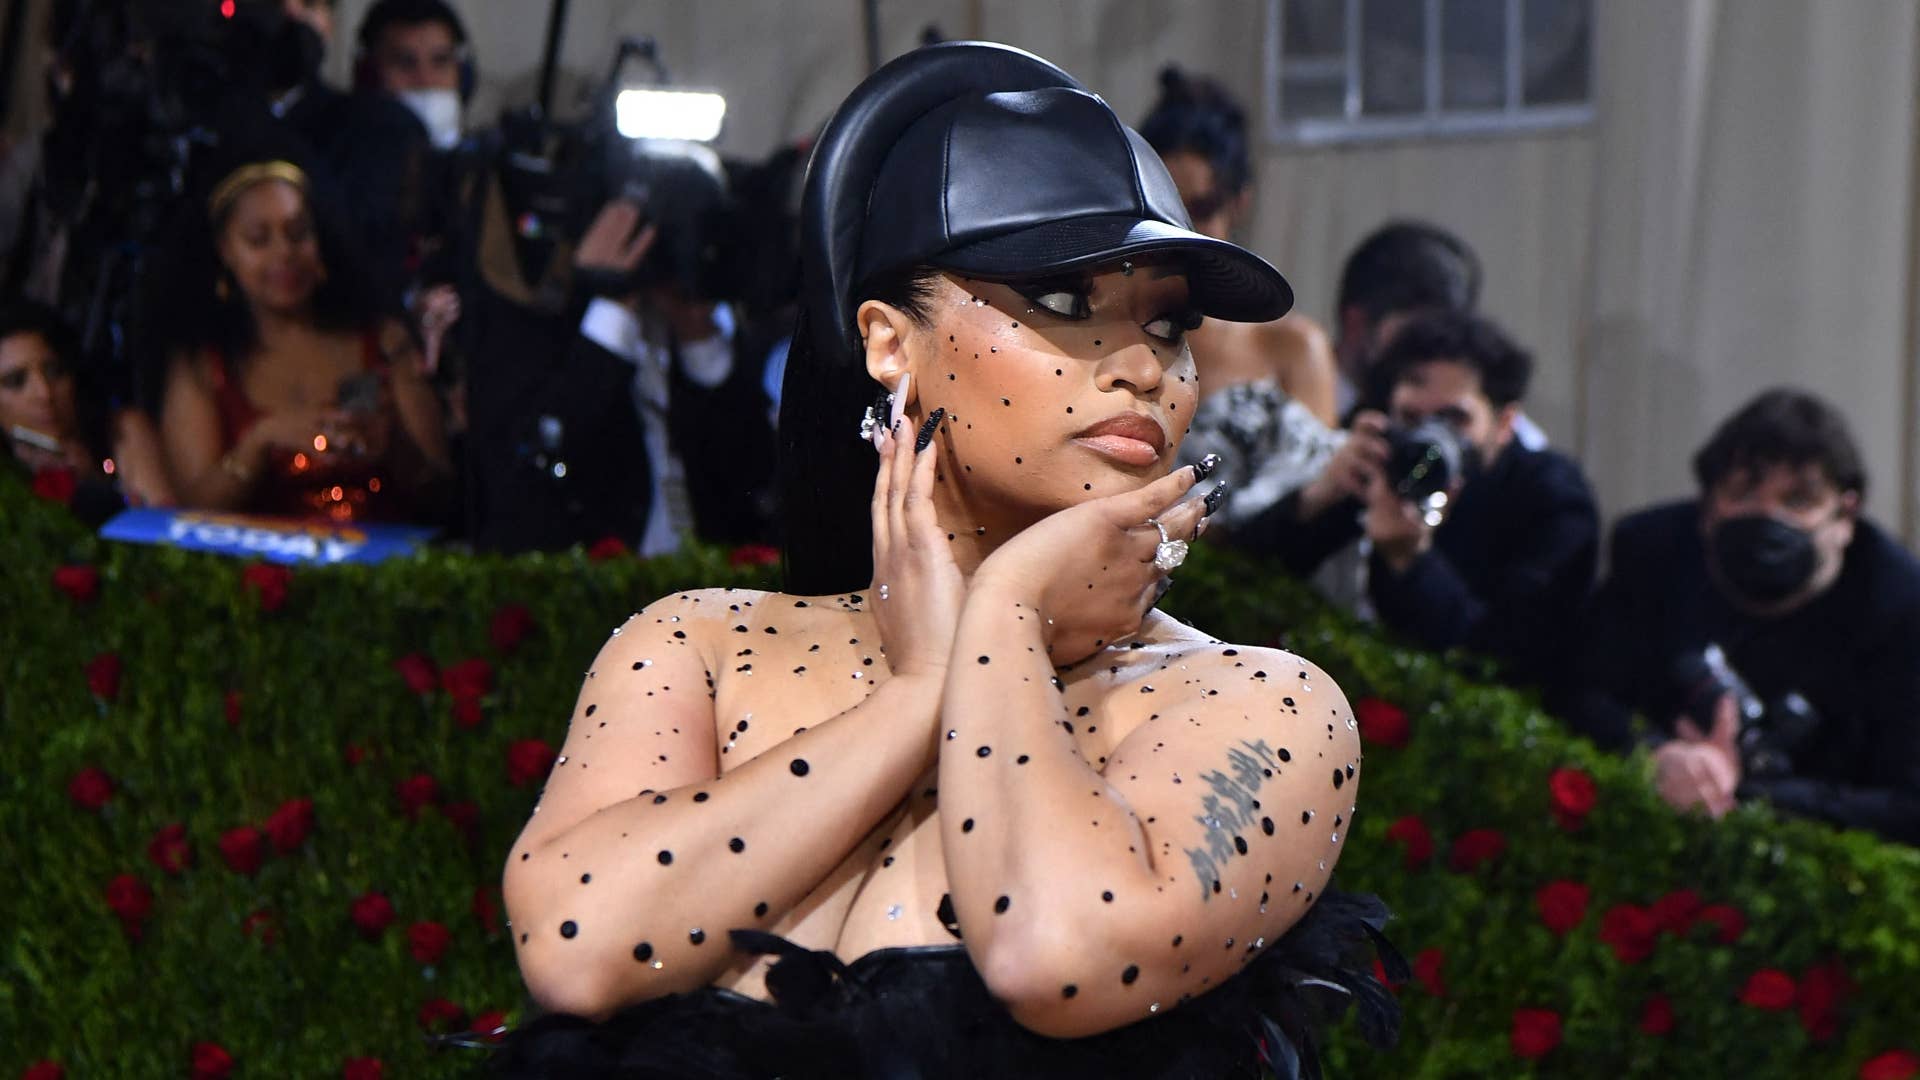 Nicki Minaj is pictured at the Met Gala